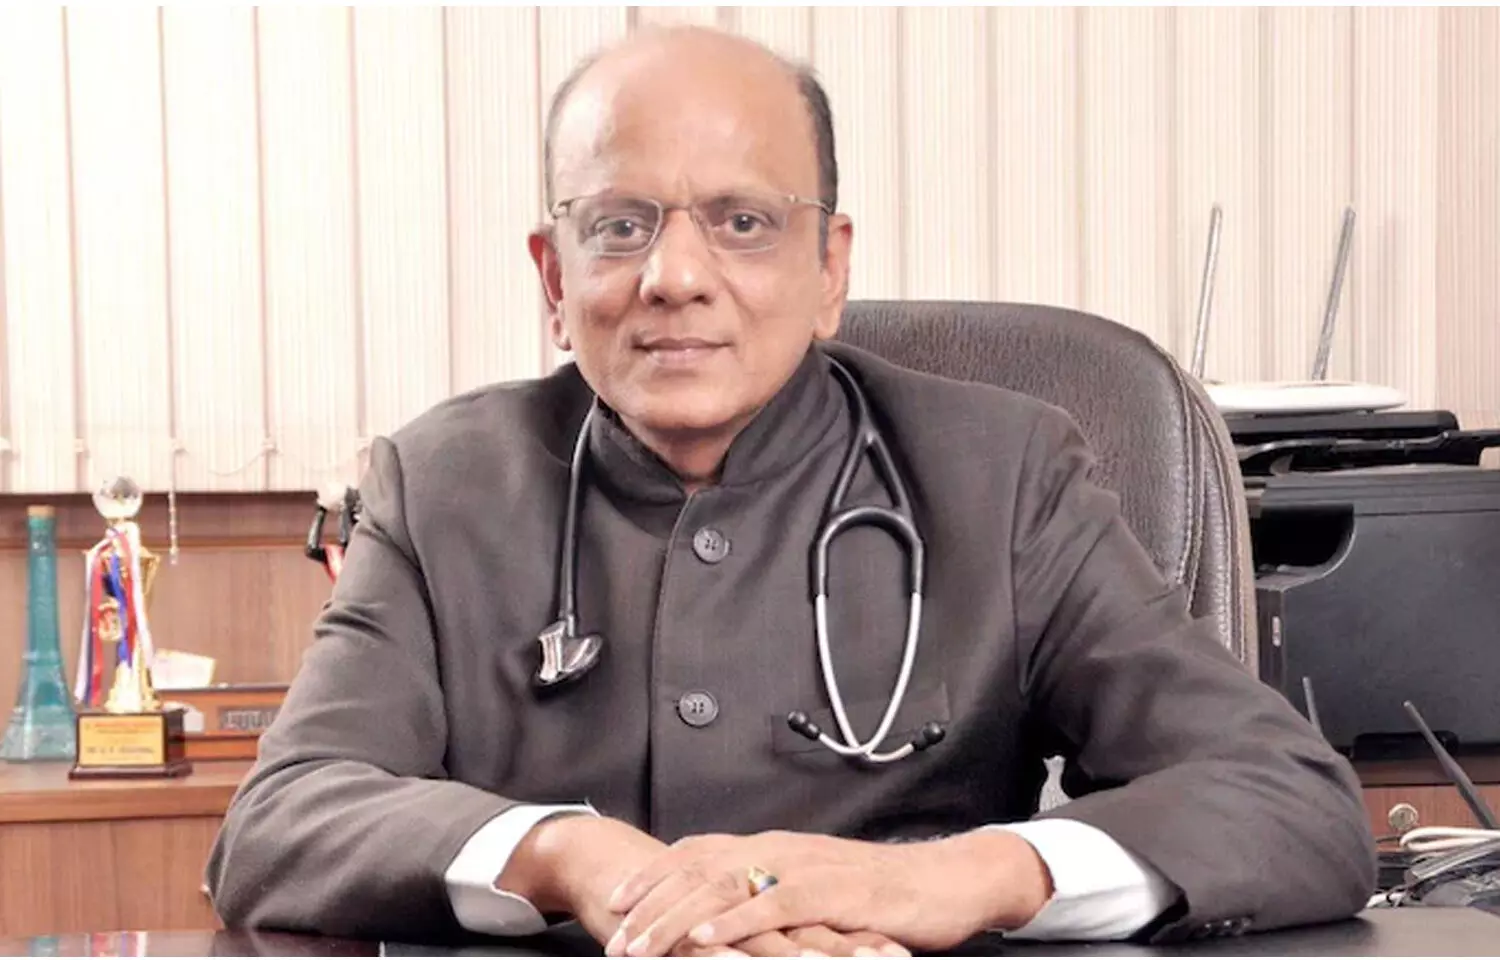 Obituary: Eminent Cardiologist, Teacher, Speaker- Padma Shri Dr KK Aggarwal no more